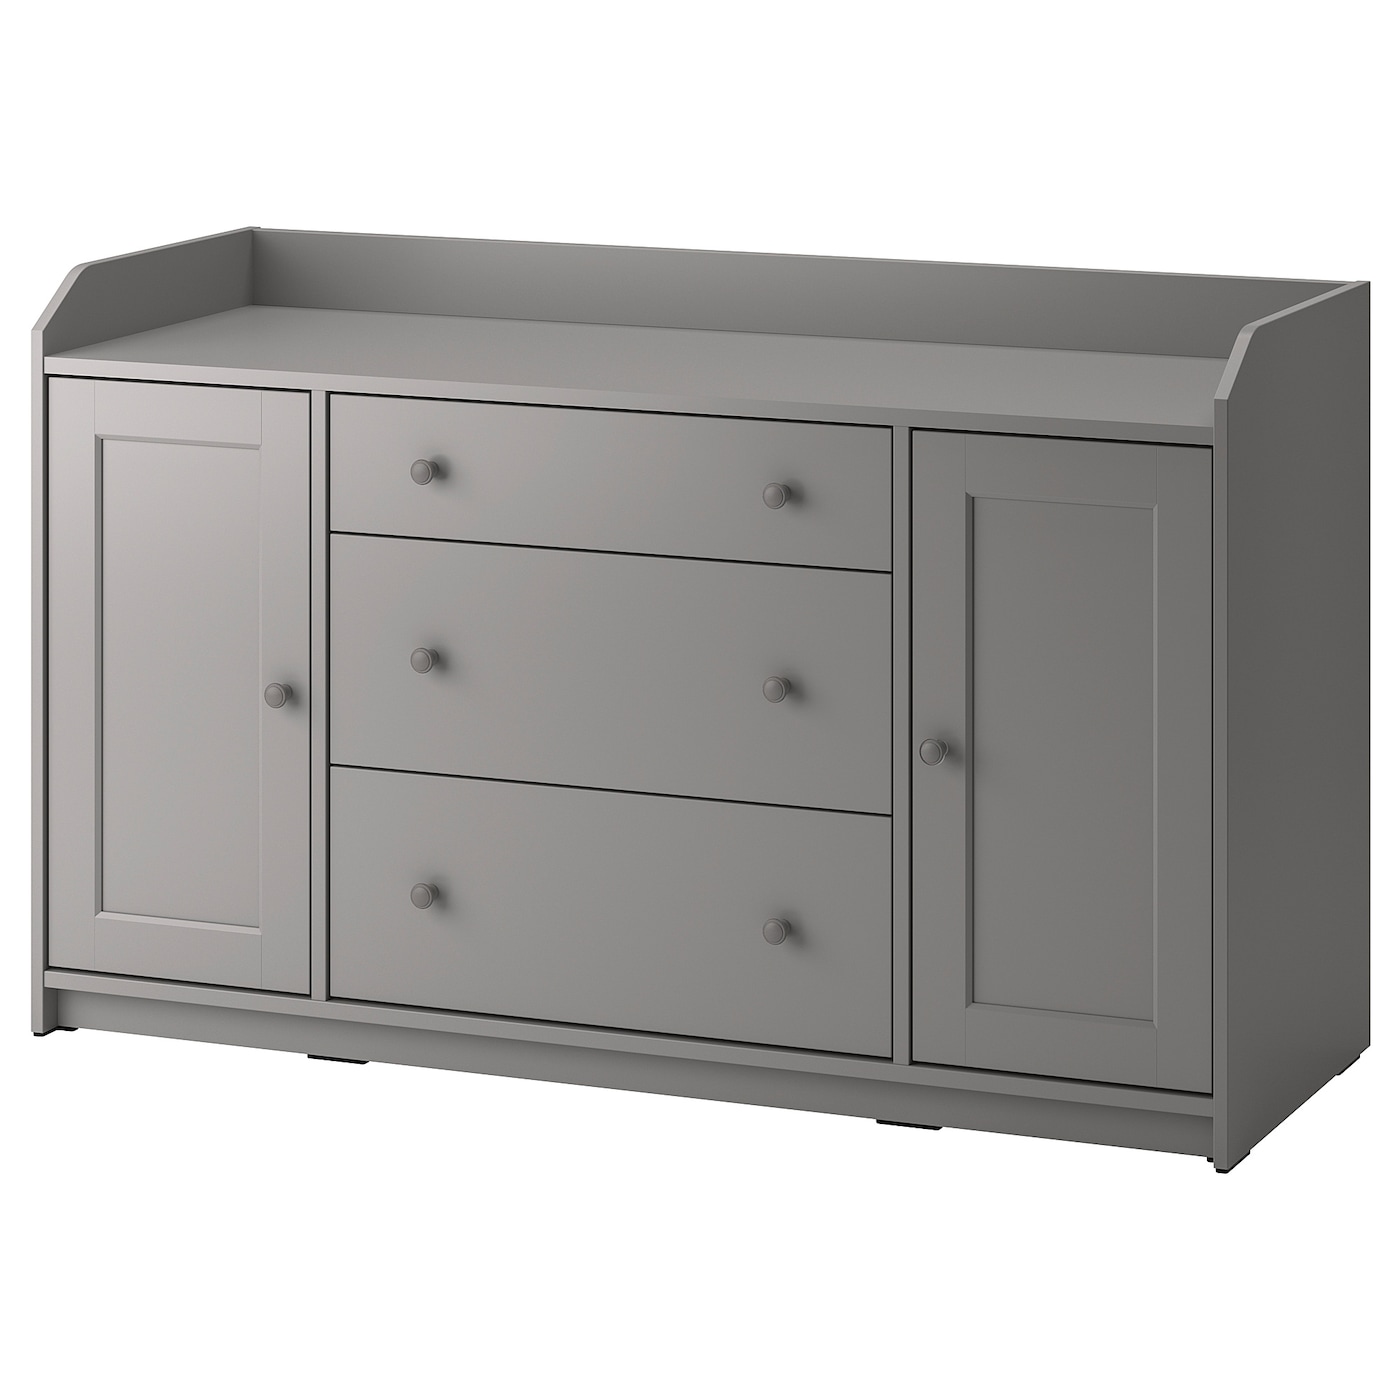 Шкаф - HAUGA IKEA/ ХАУГА ИКЕА,  140x84 см, серый